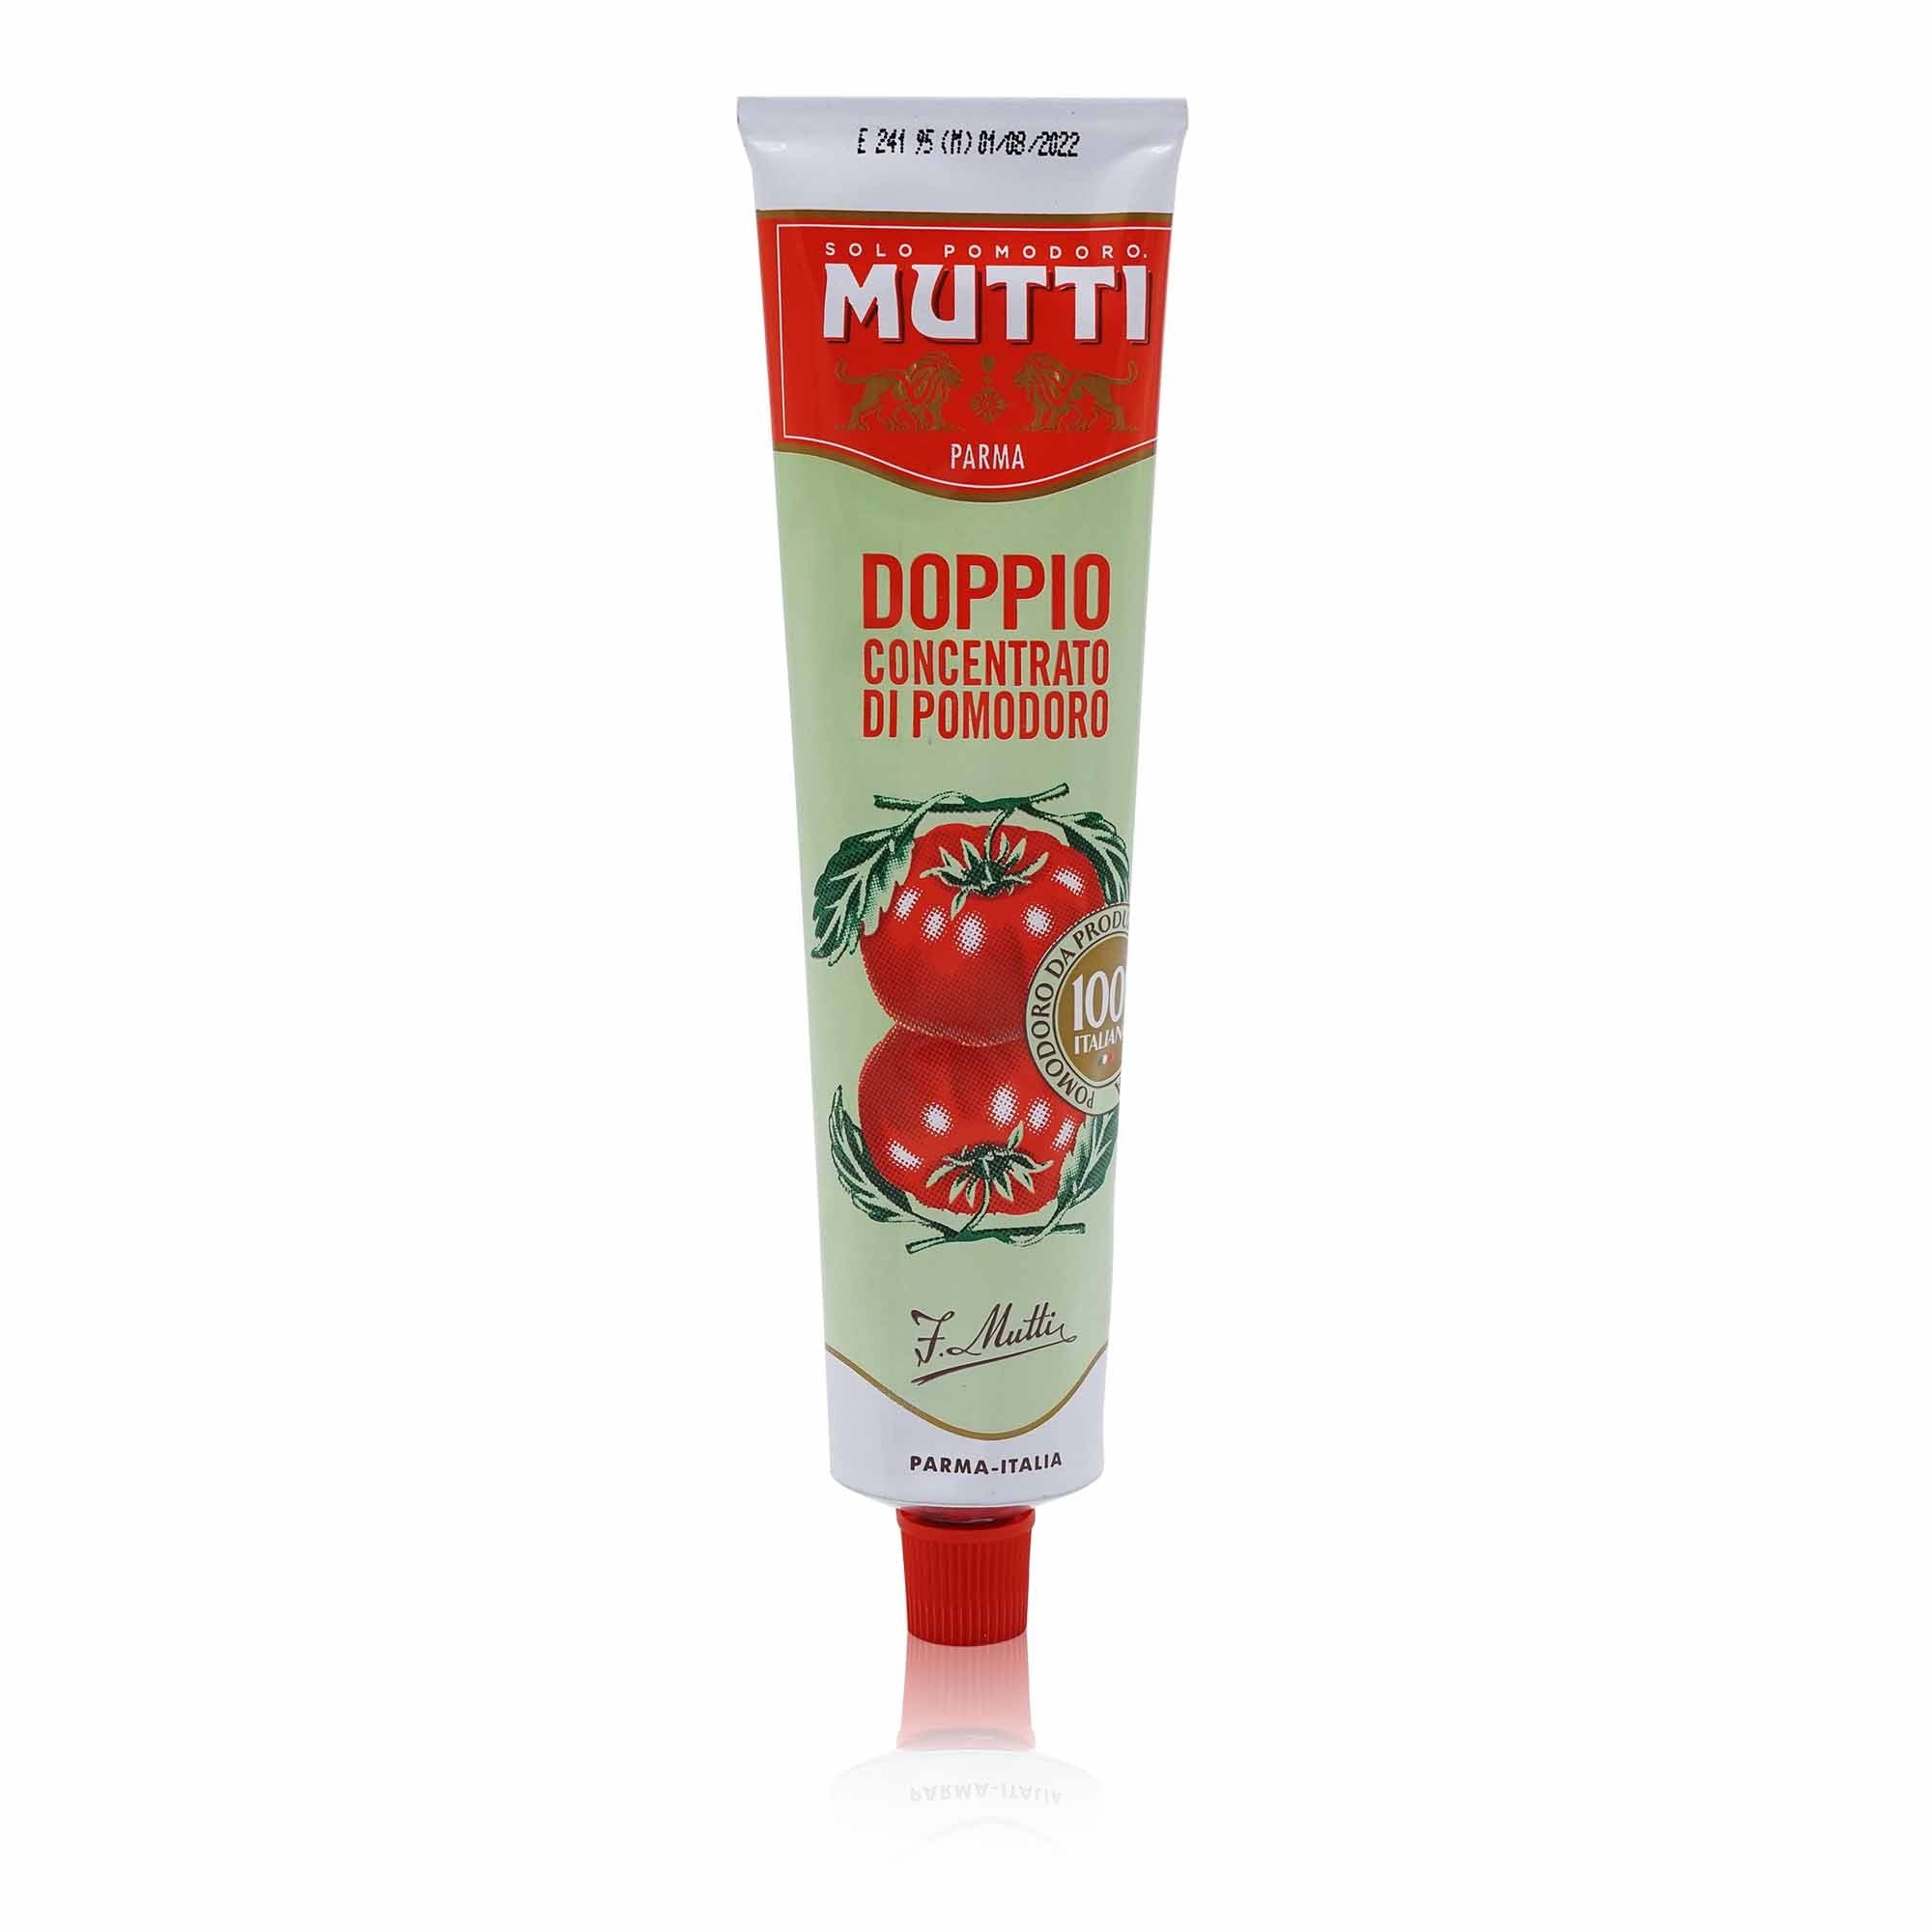 MUTTI Doppio Concentrato – Tomatenmark doppelt konzentriert - 0,130kg